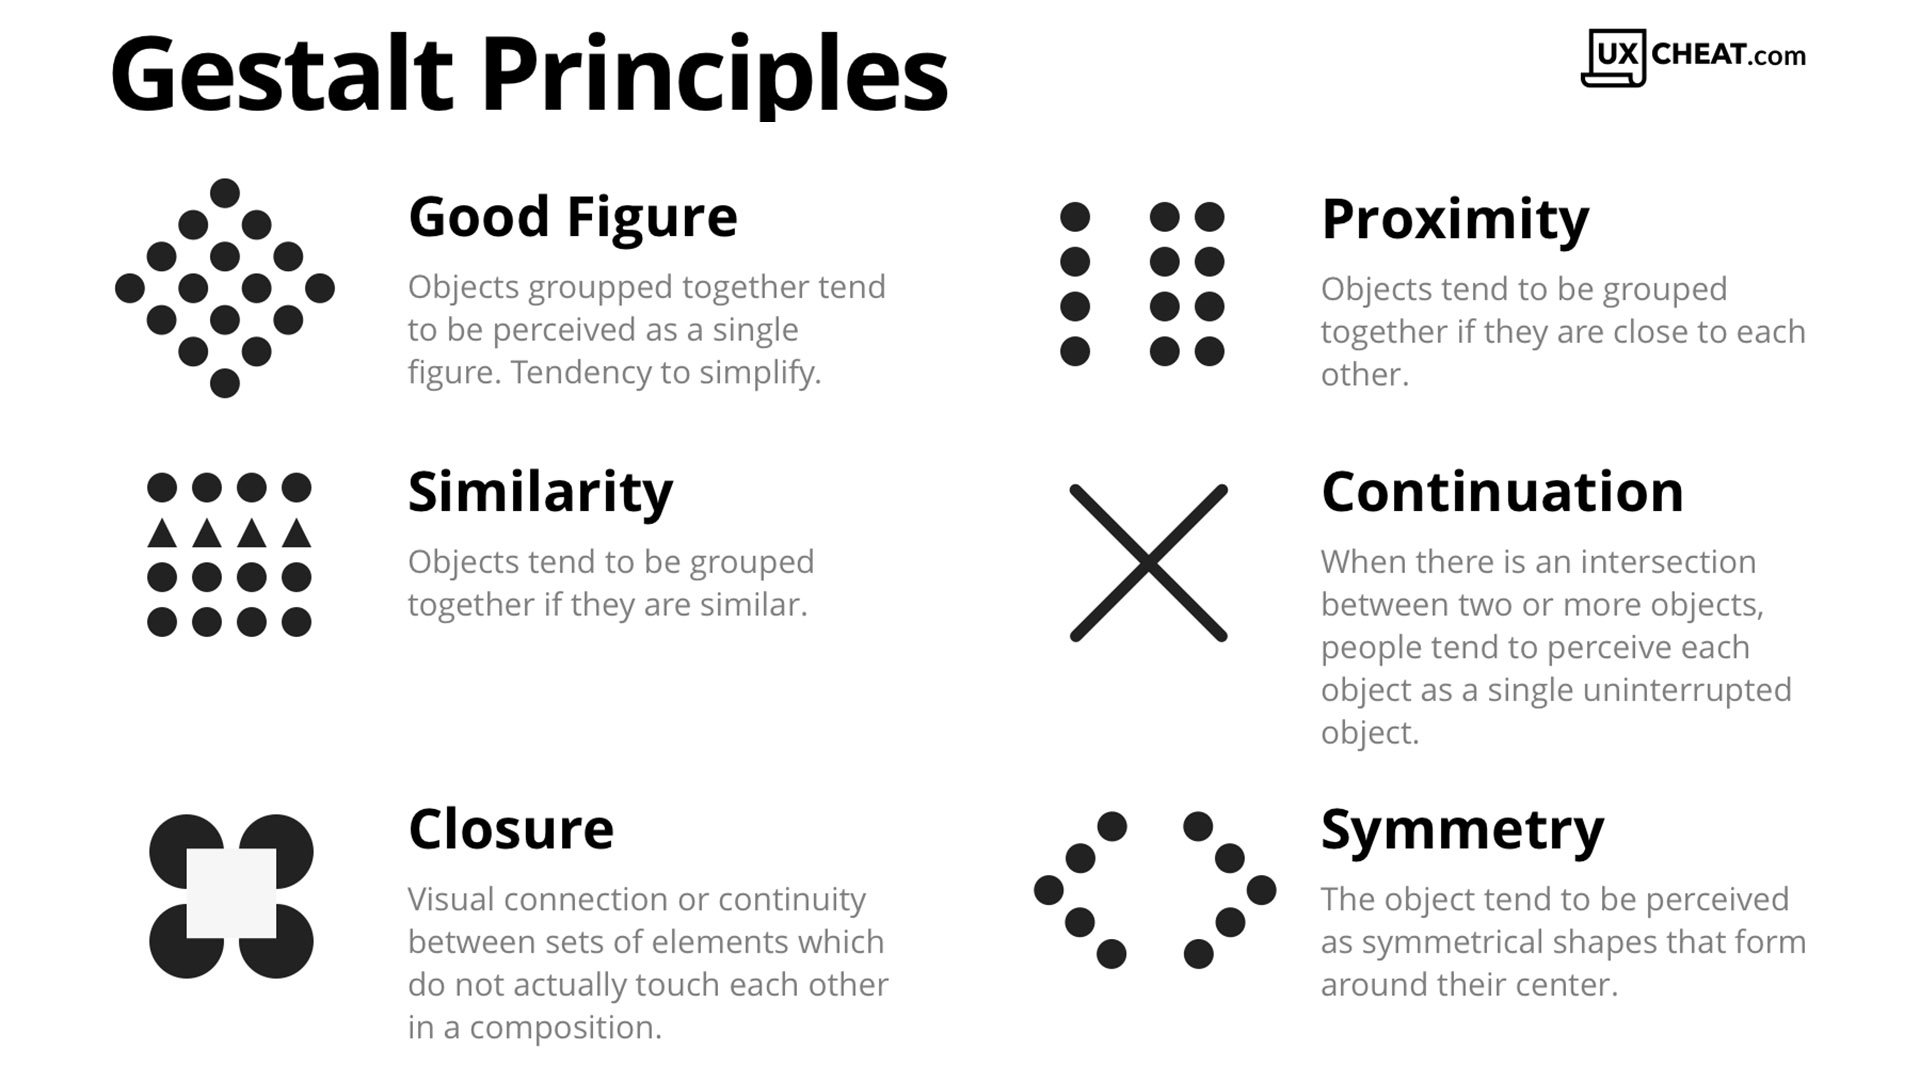 gestalt principles of similarity proximity and closure